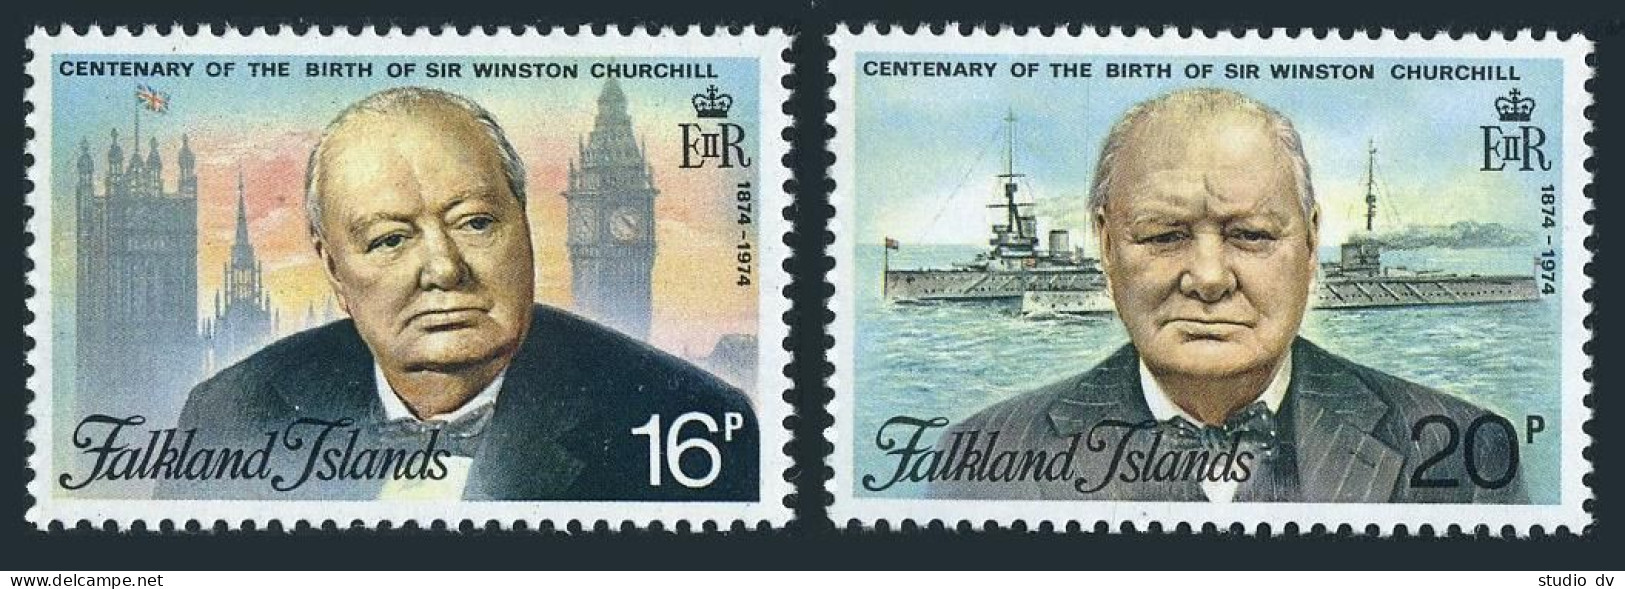 Falkland 235-236, 236a, MNH. Winston Churchill, 1974. Parliament, Big Ben, Ship. - Falkland Islands